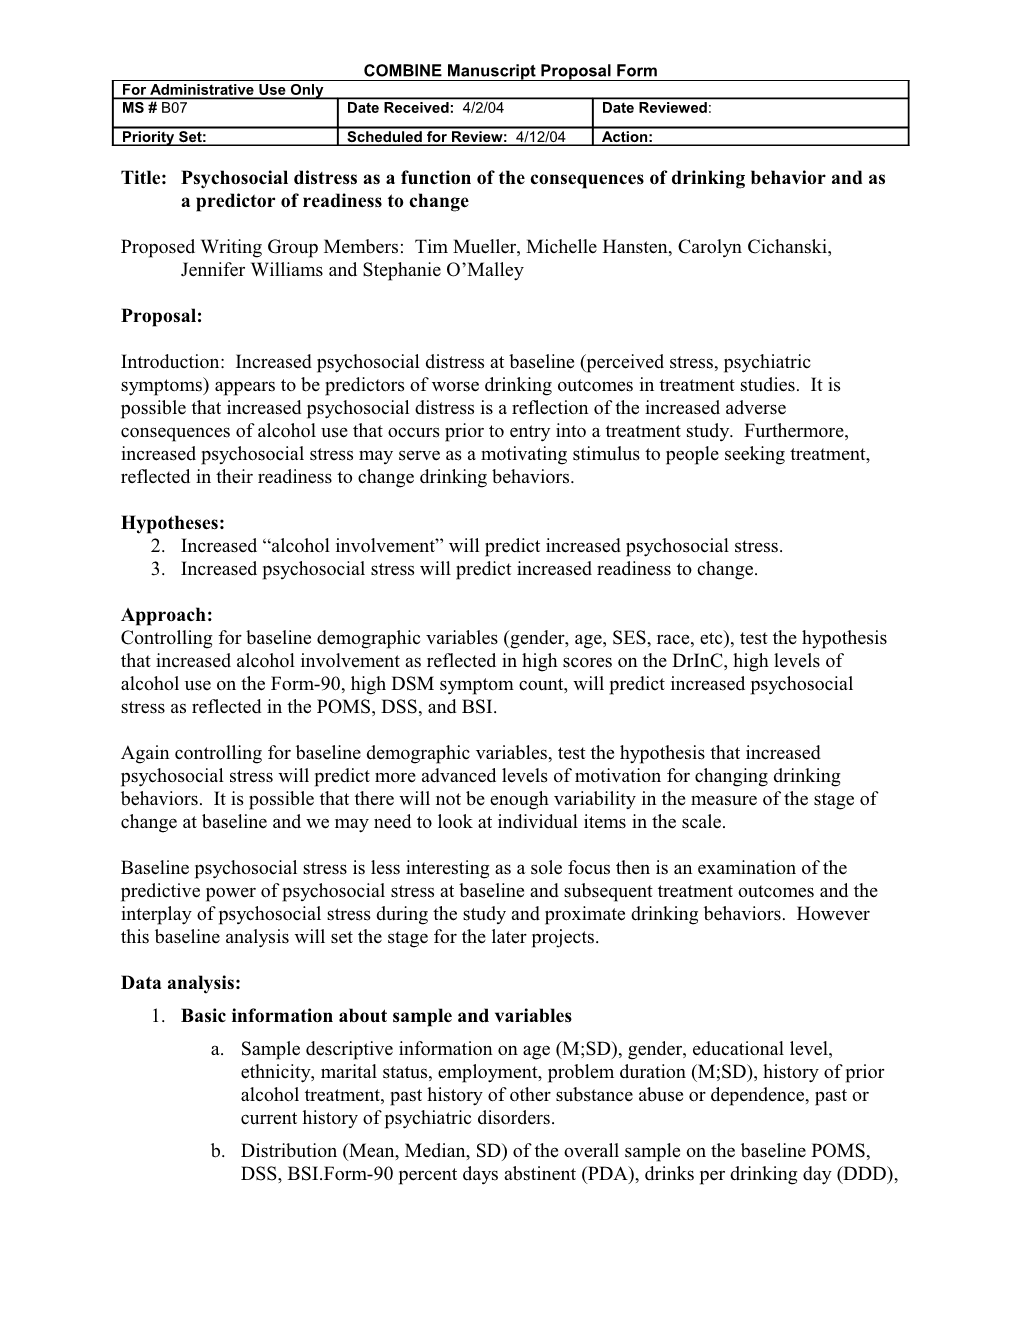 ENRICHD Manuscipt Proposal Form s2